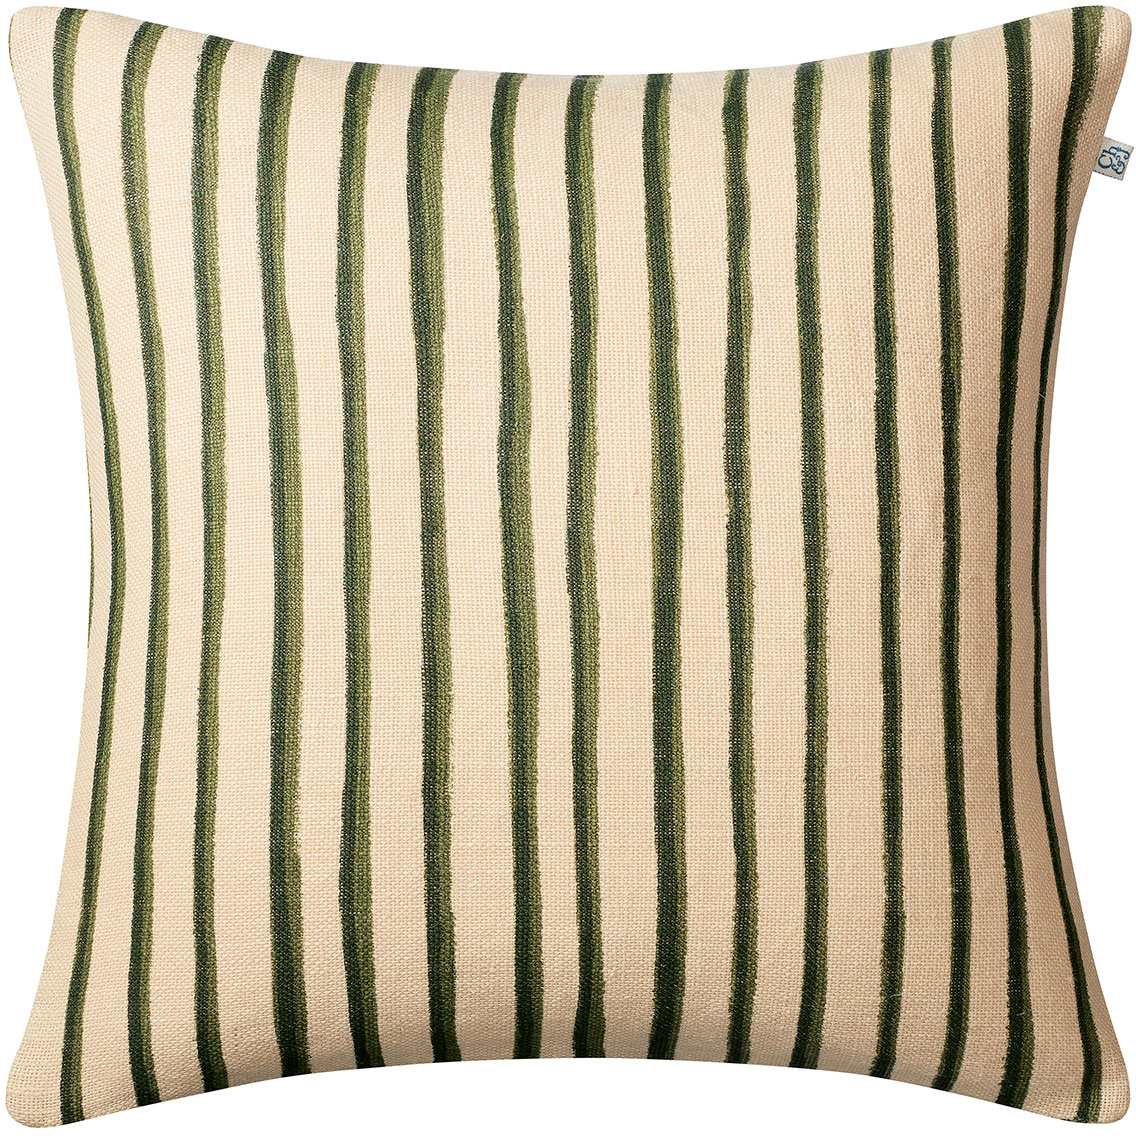 Jaipur Stripe Kuddfodral 50x50 cm, Light Beige / Cactus Green / Green